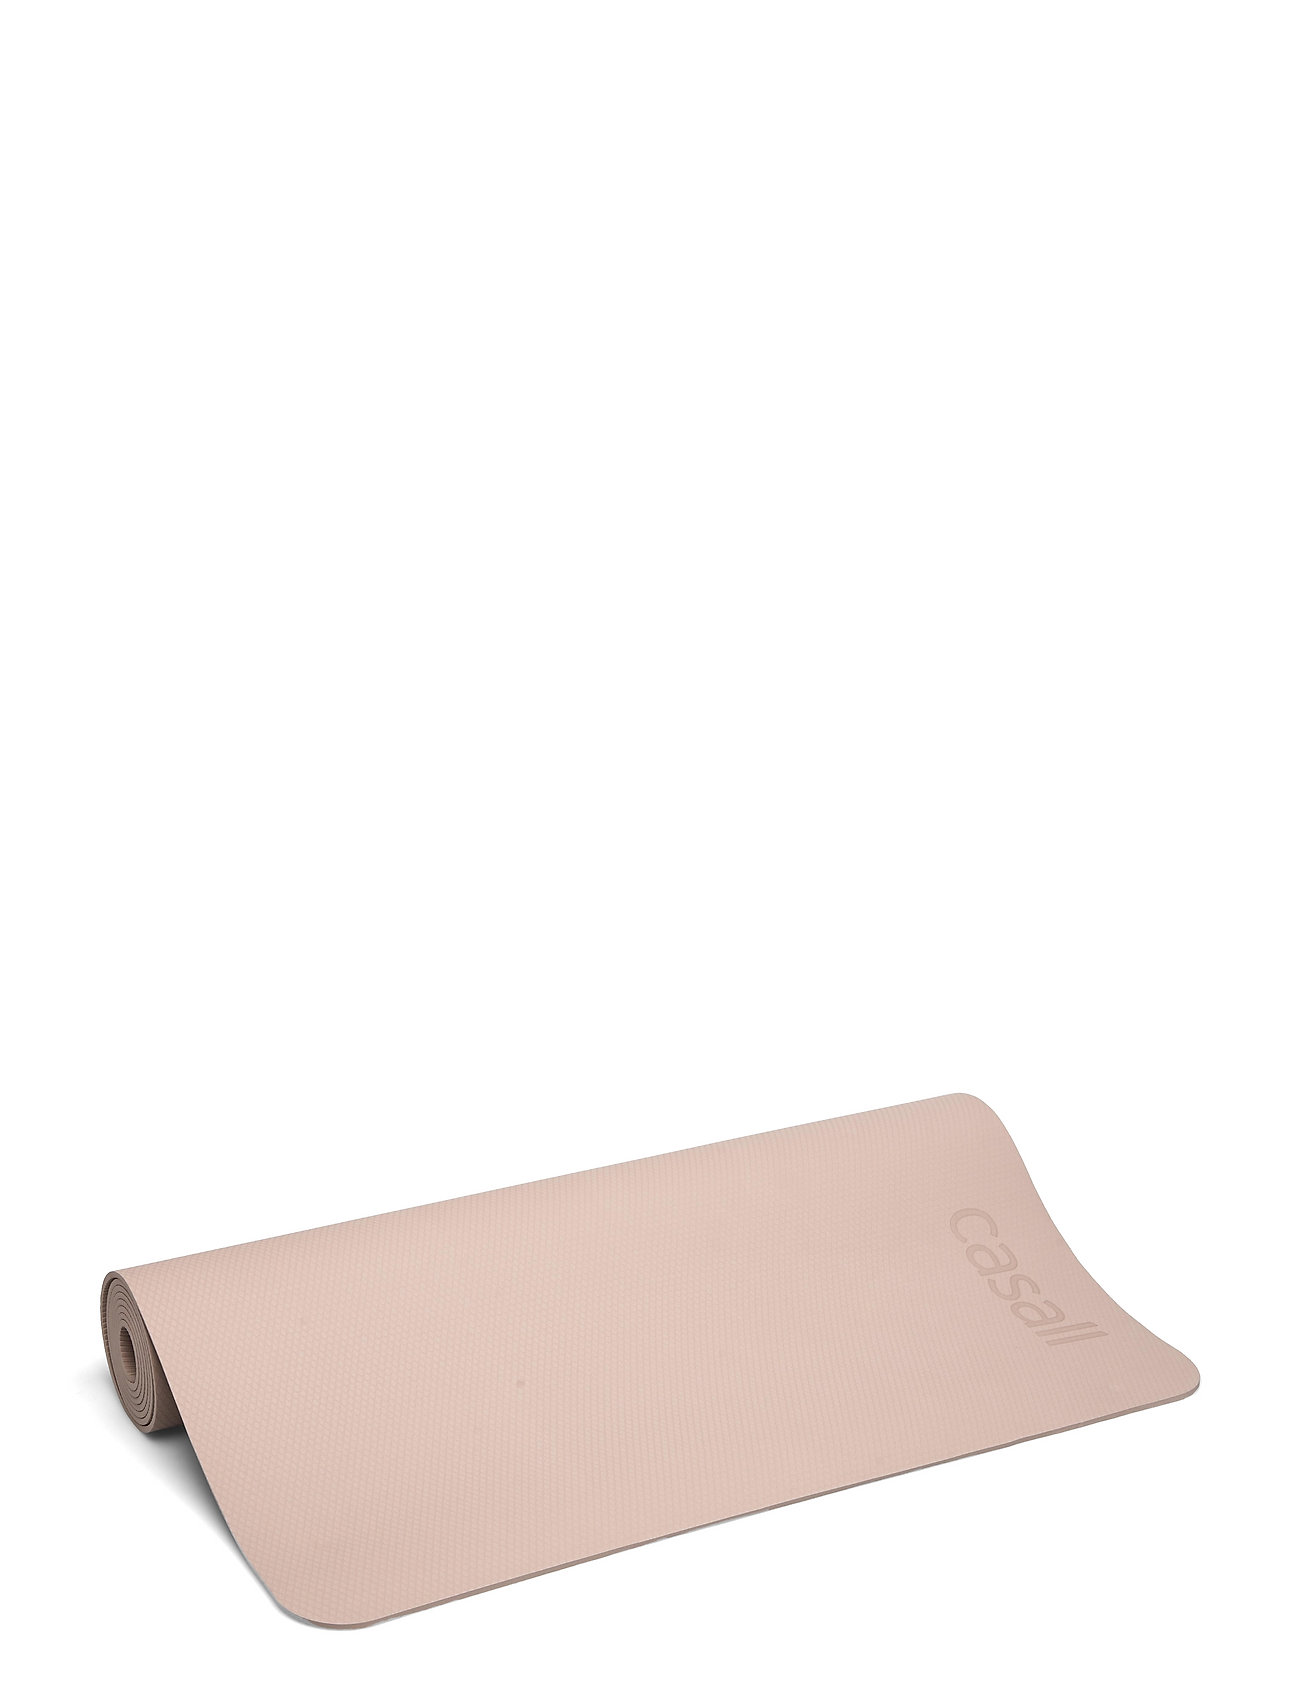 Casall Yoga Mat Position 4mm – accessories – shop at Booztlet